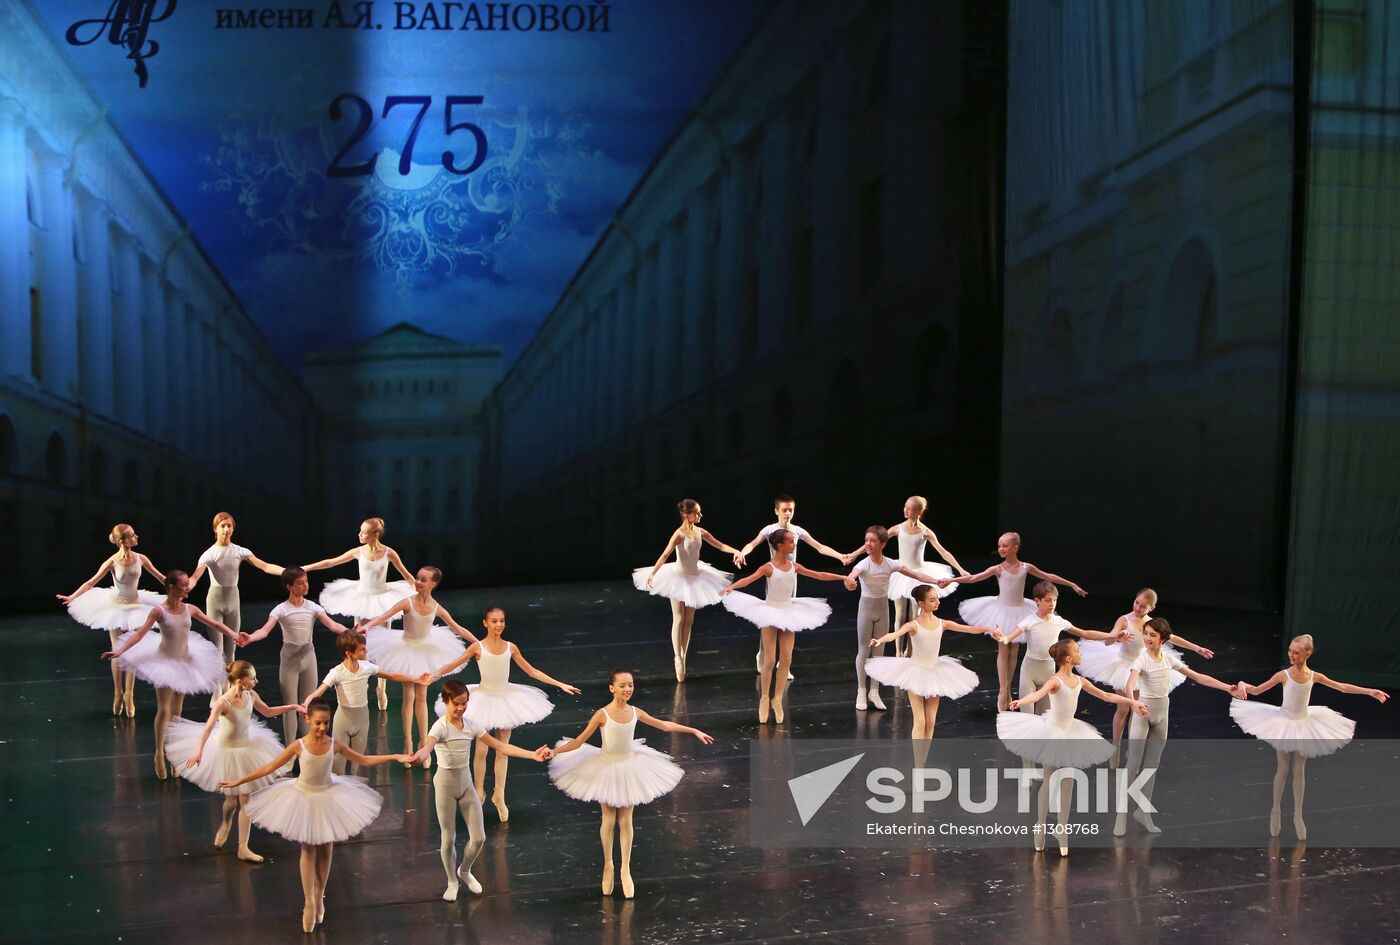 Concert honors 275th anniversary of Vaganova Academy of Ballet